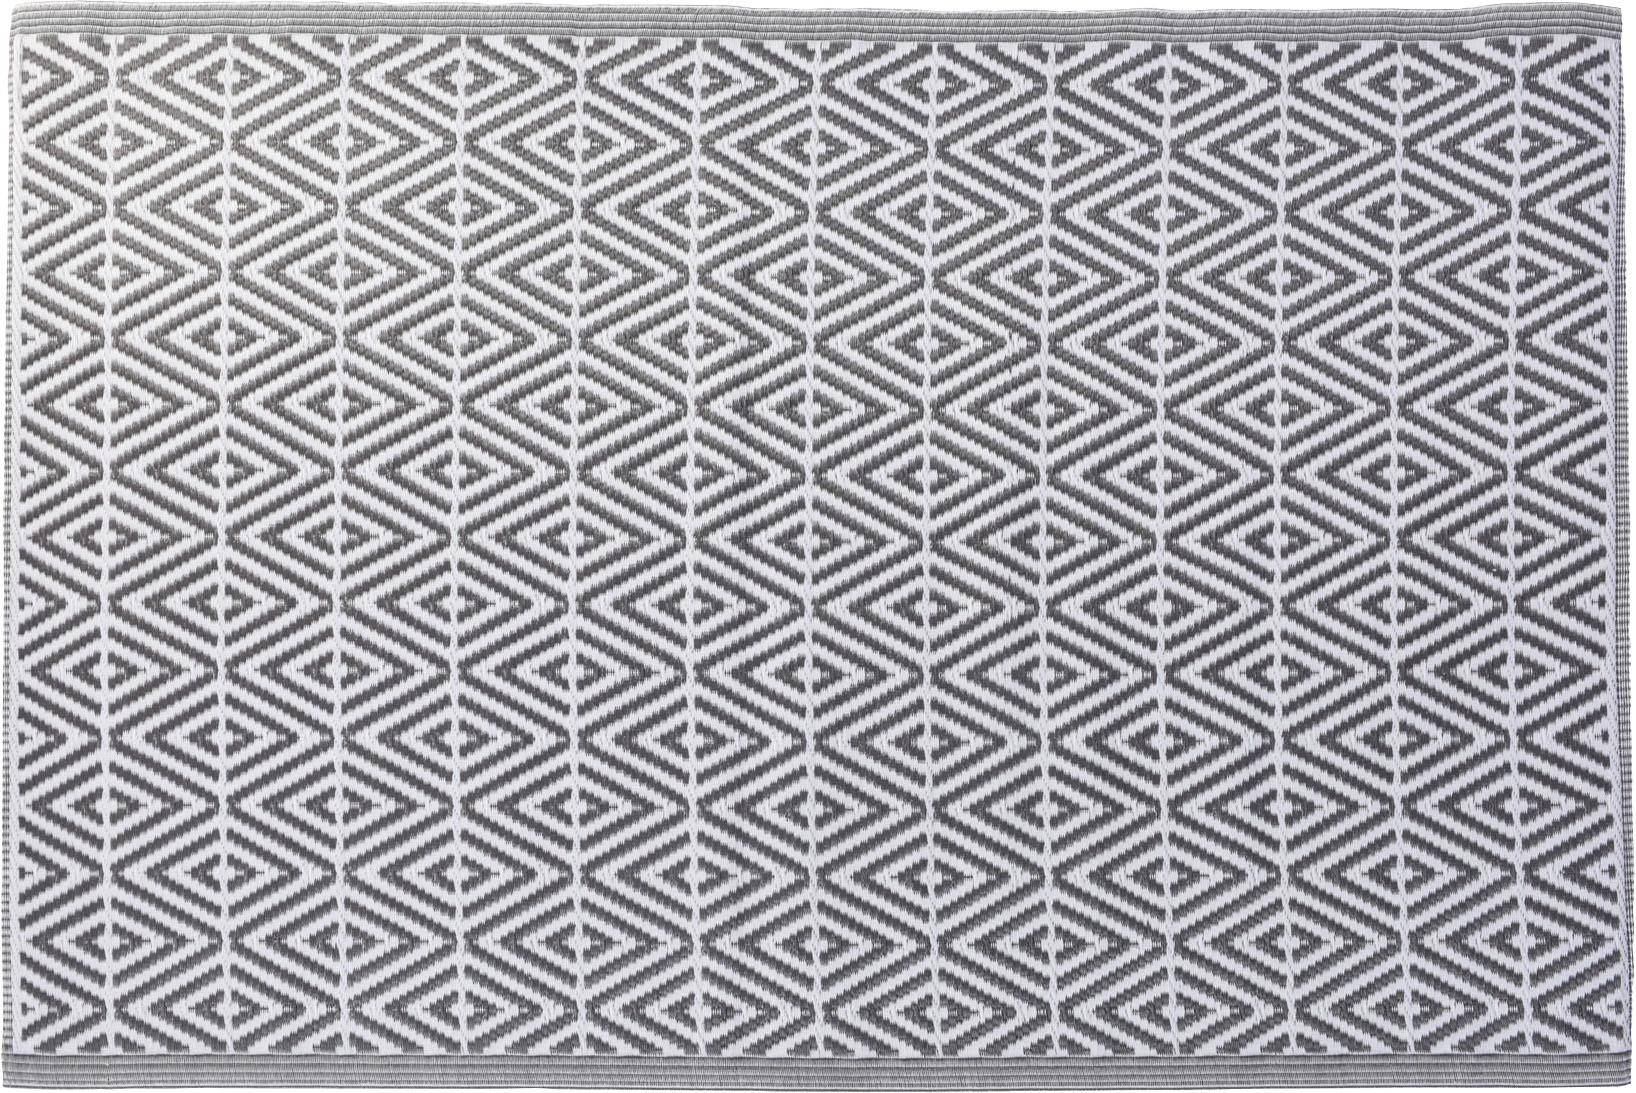 Outdoor-Teppich Grau/Weiß Abstrakt 120x180 cm - Weiß/Grau, Basics, Textil (120/180cm)